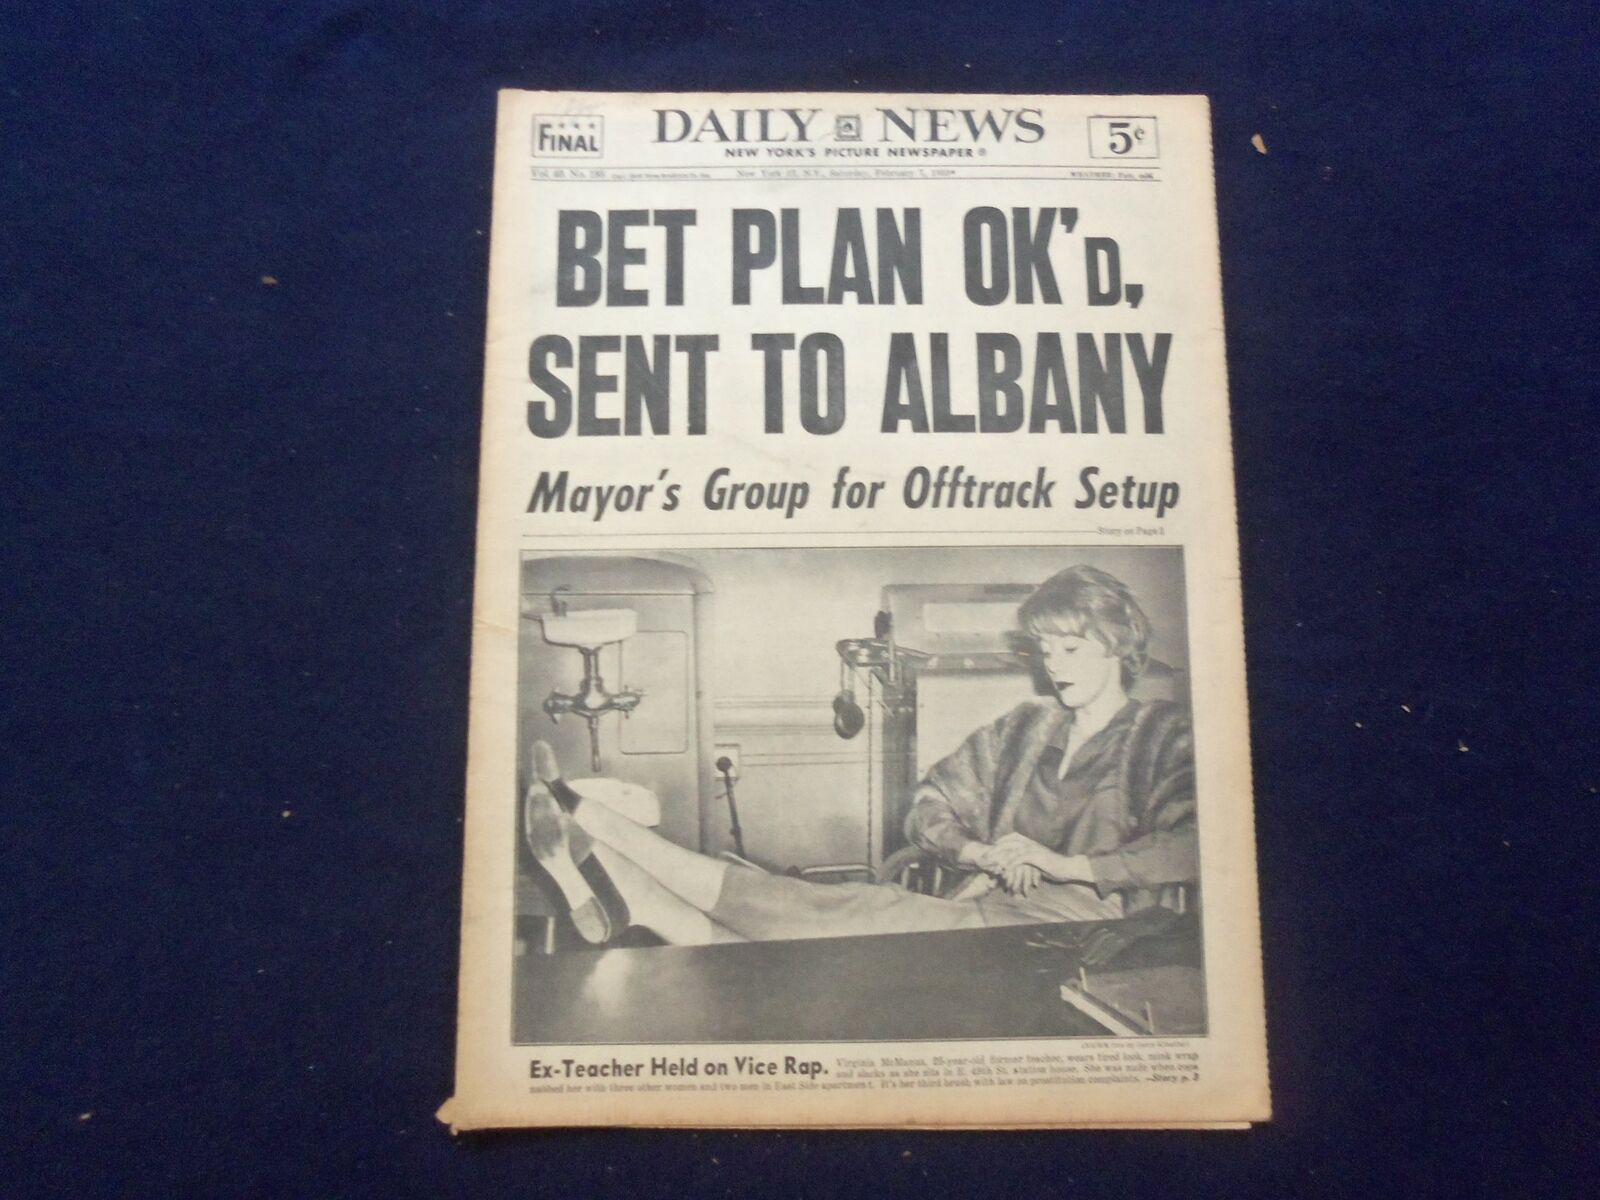 1959 FEB 7 NEW YORK DAILY NEWS NEWSPAPER -BET PLAN OK\'D, SENT TO ALBANY- NP 6754